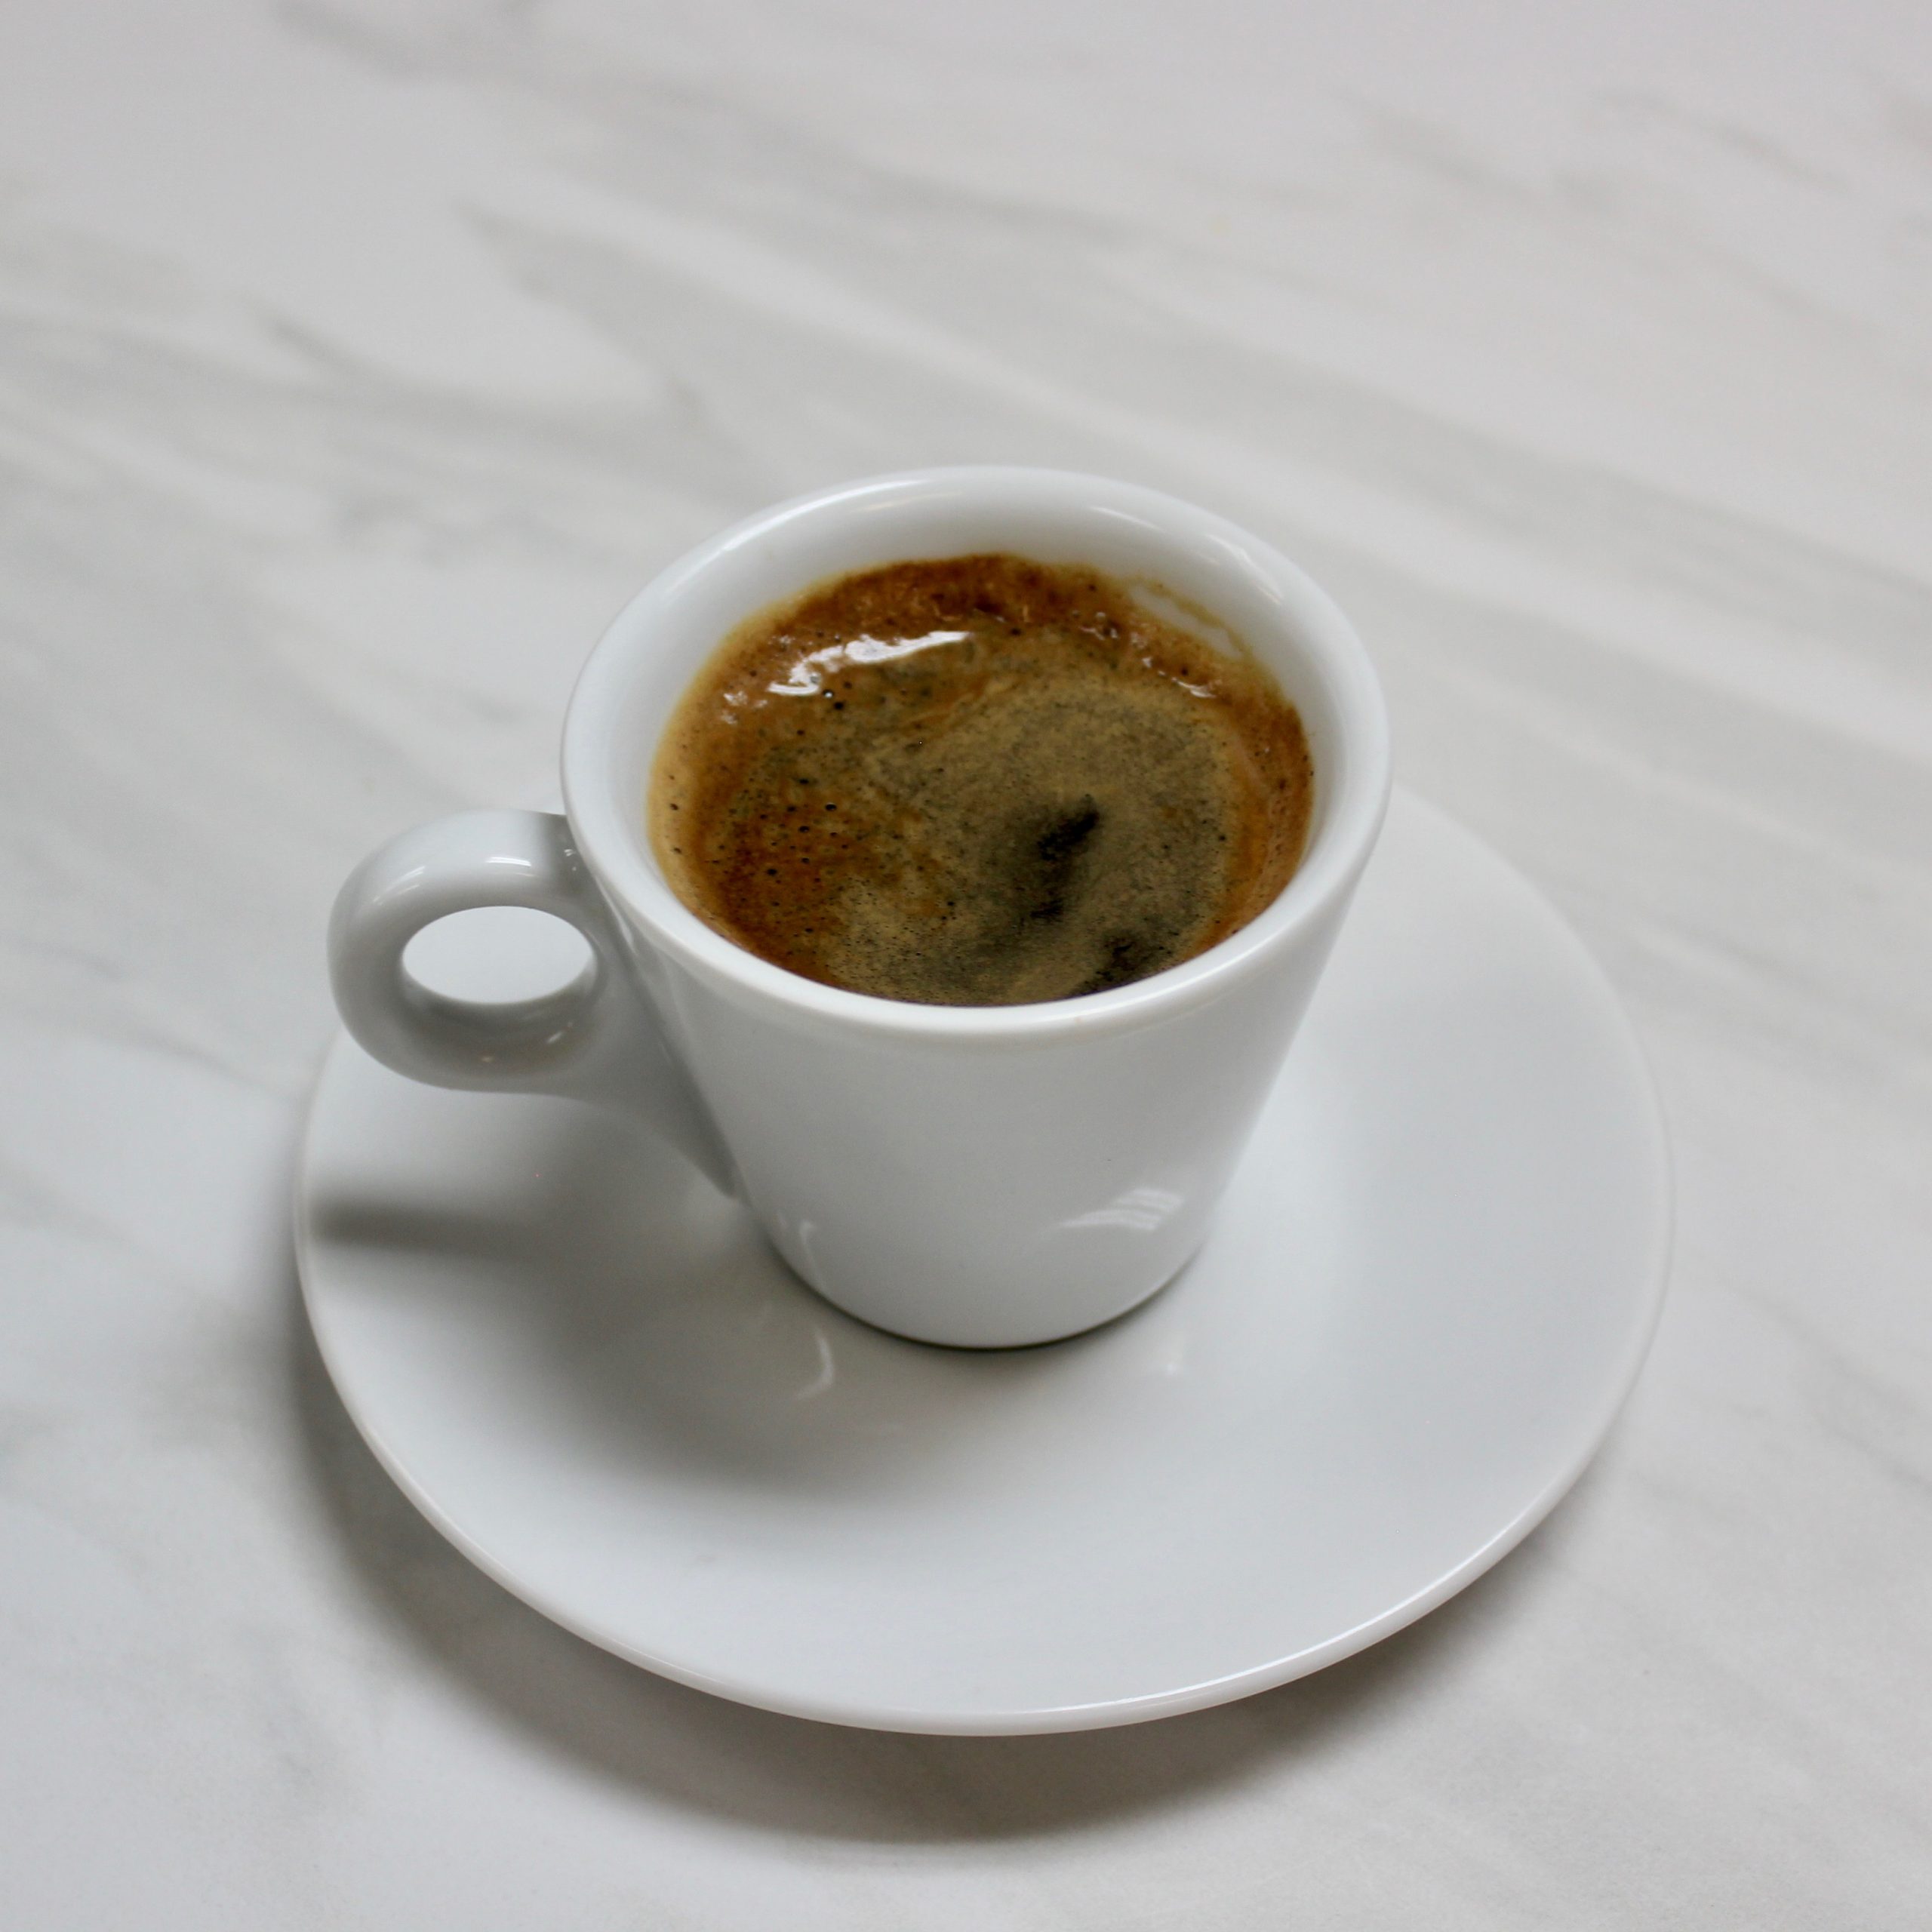 How to drink espresso like an Italian - Business Insider